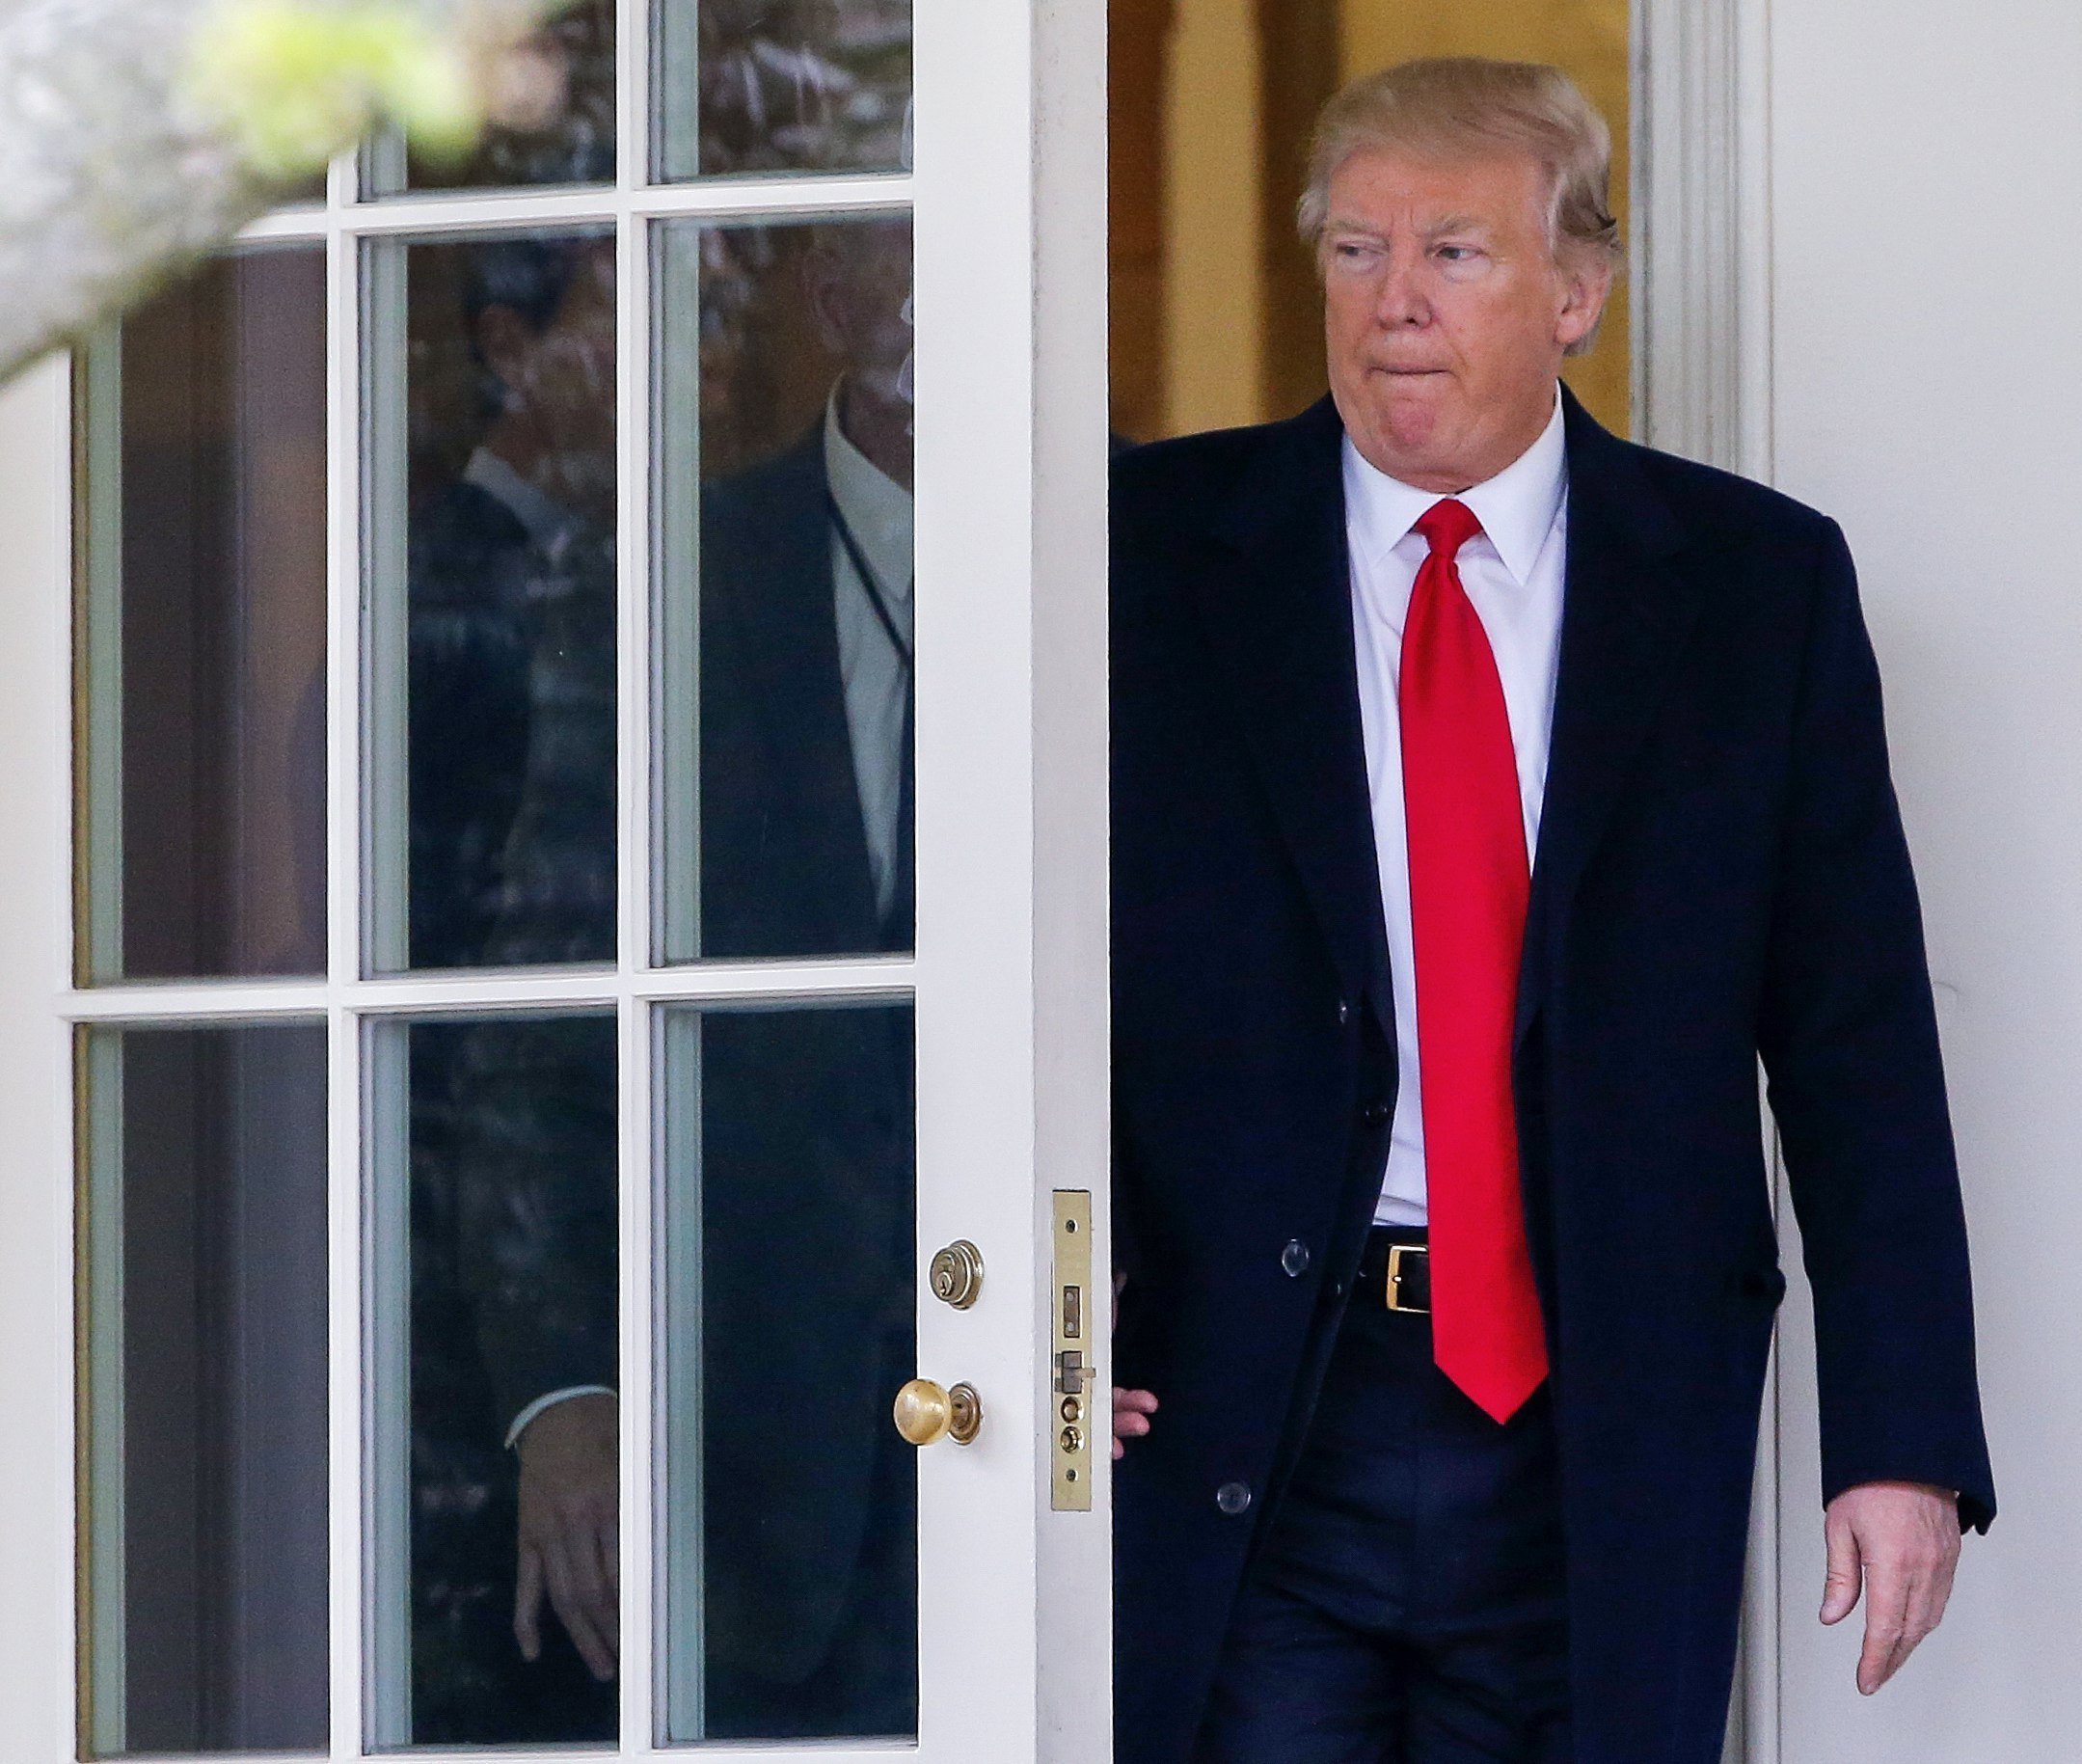 Trump invita al presidente palestino a visitar la Casa Blanca